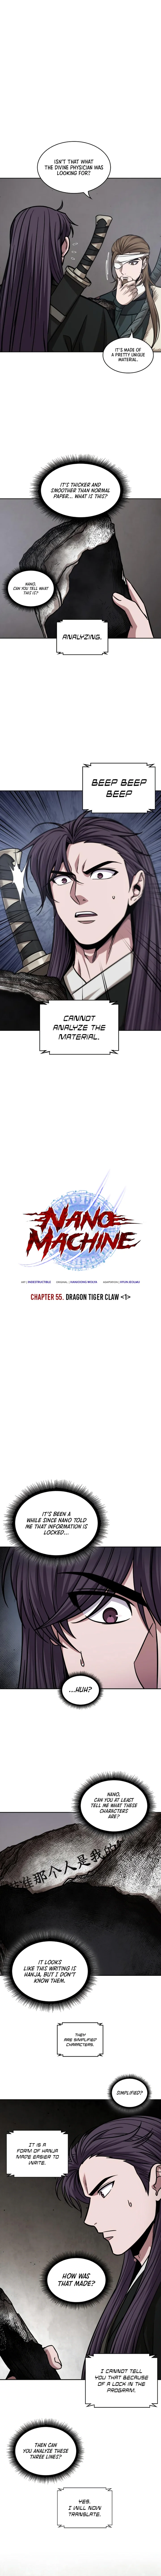 Nano Machine Chapter 156 - Page 2